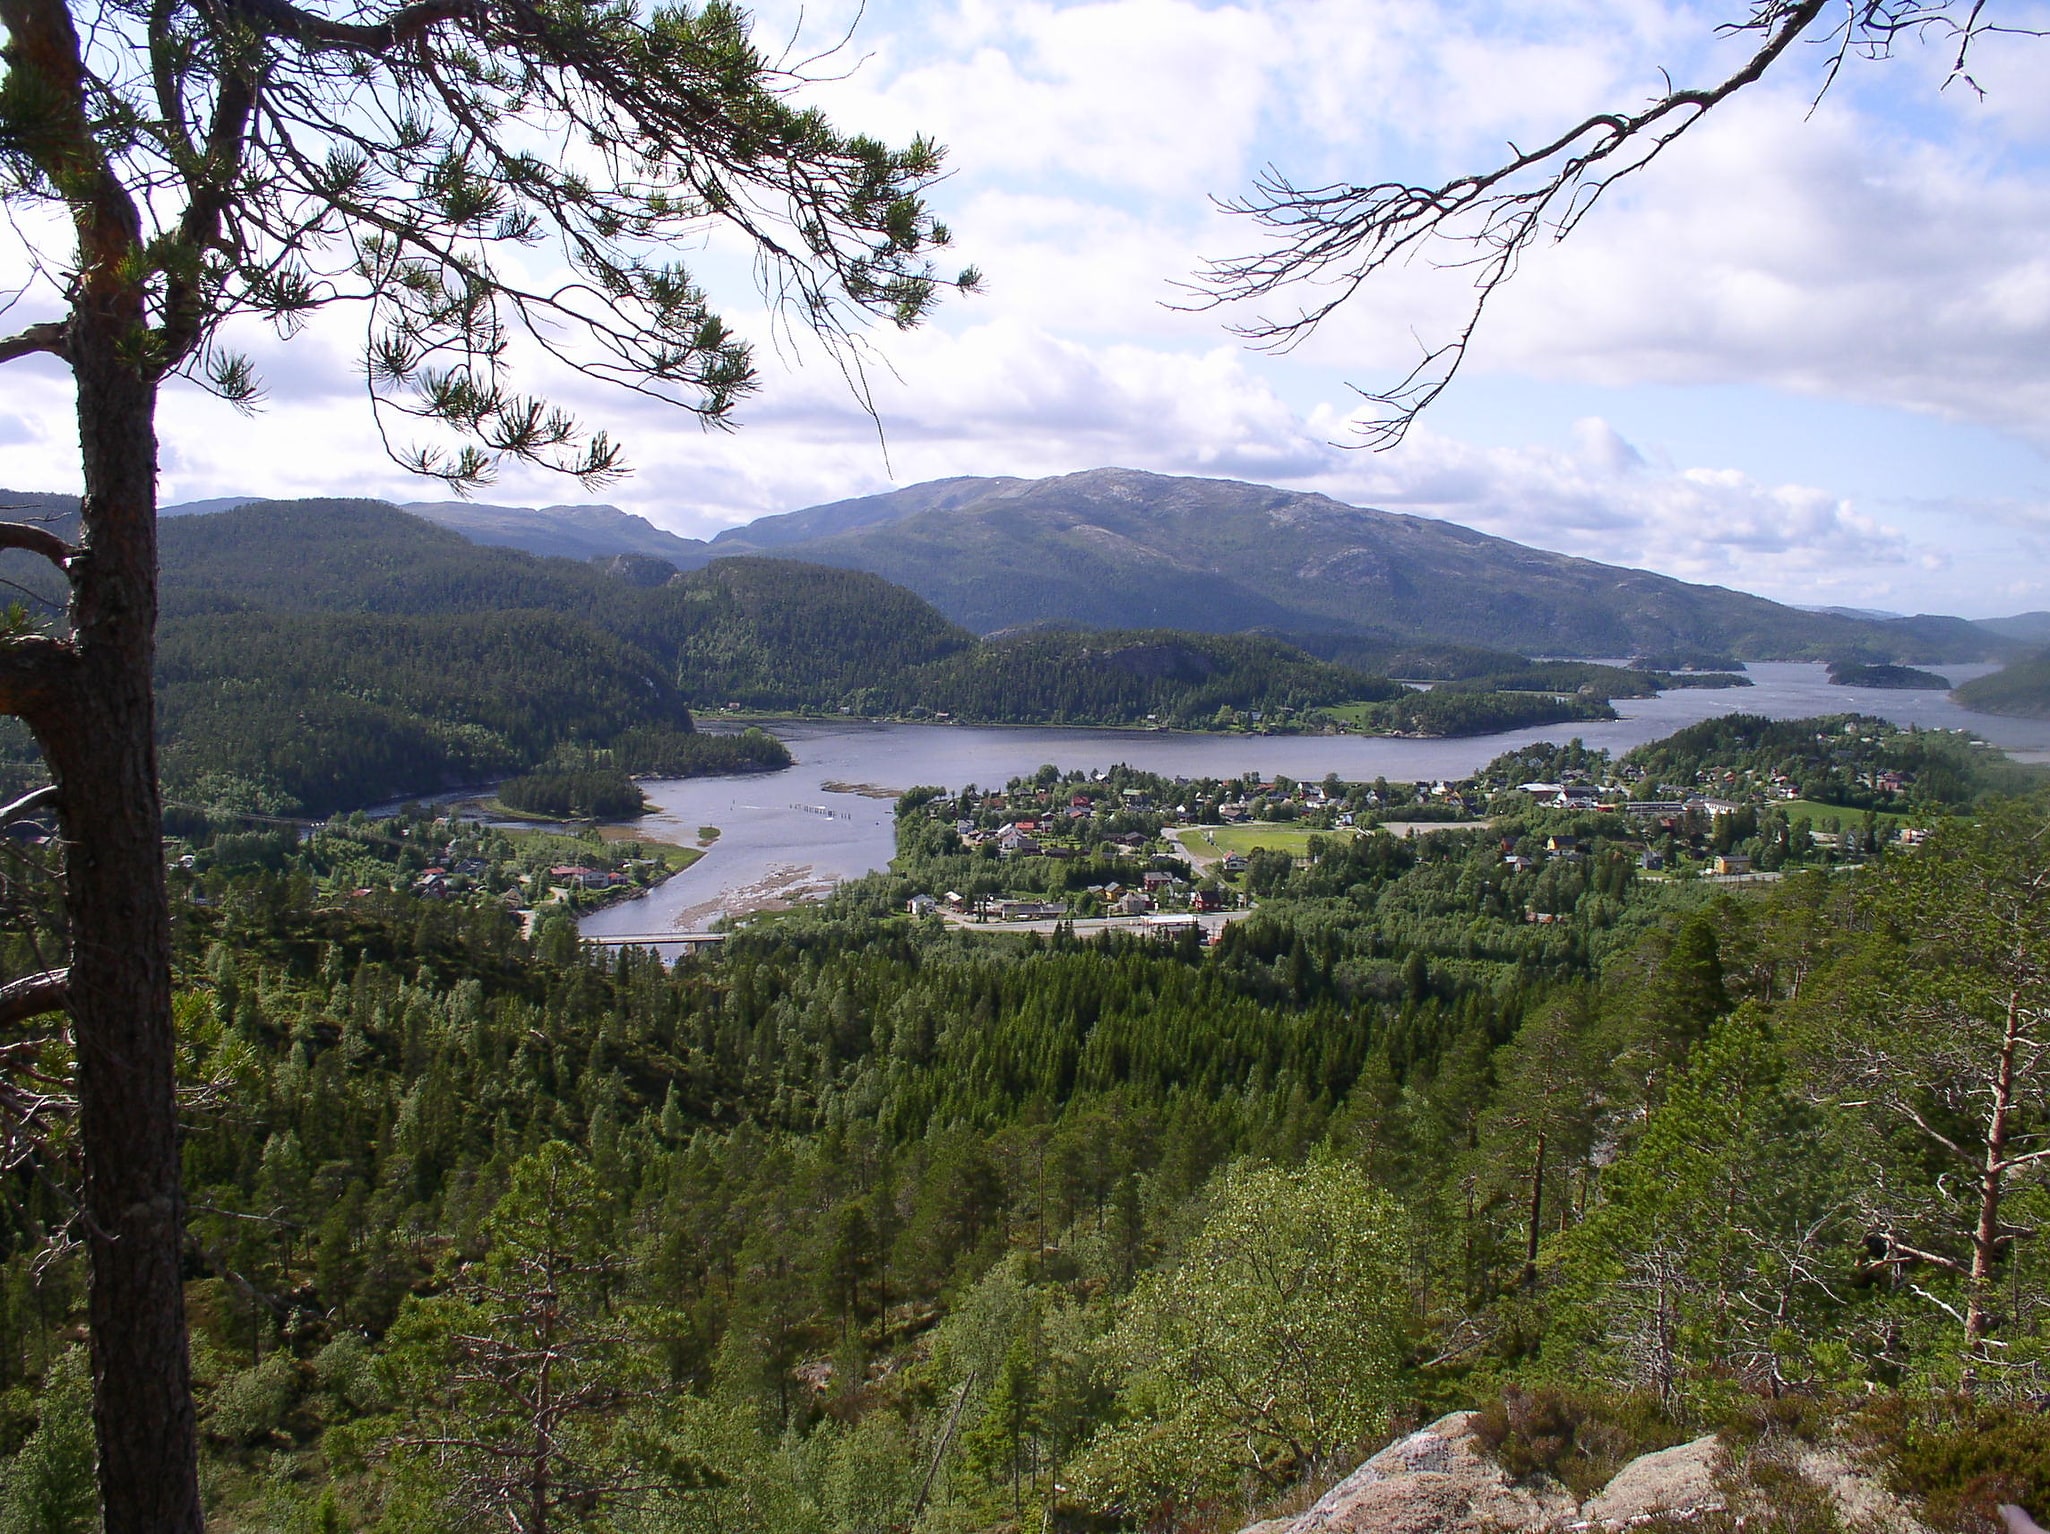 Blåfjella–Skjækerfjella National Park, Norway